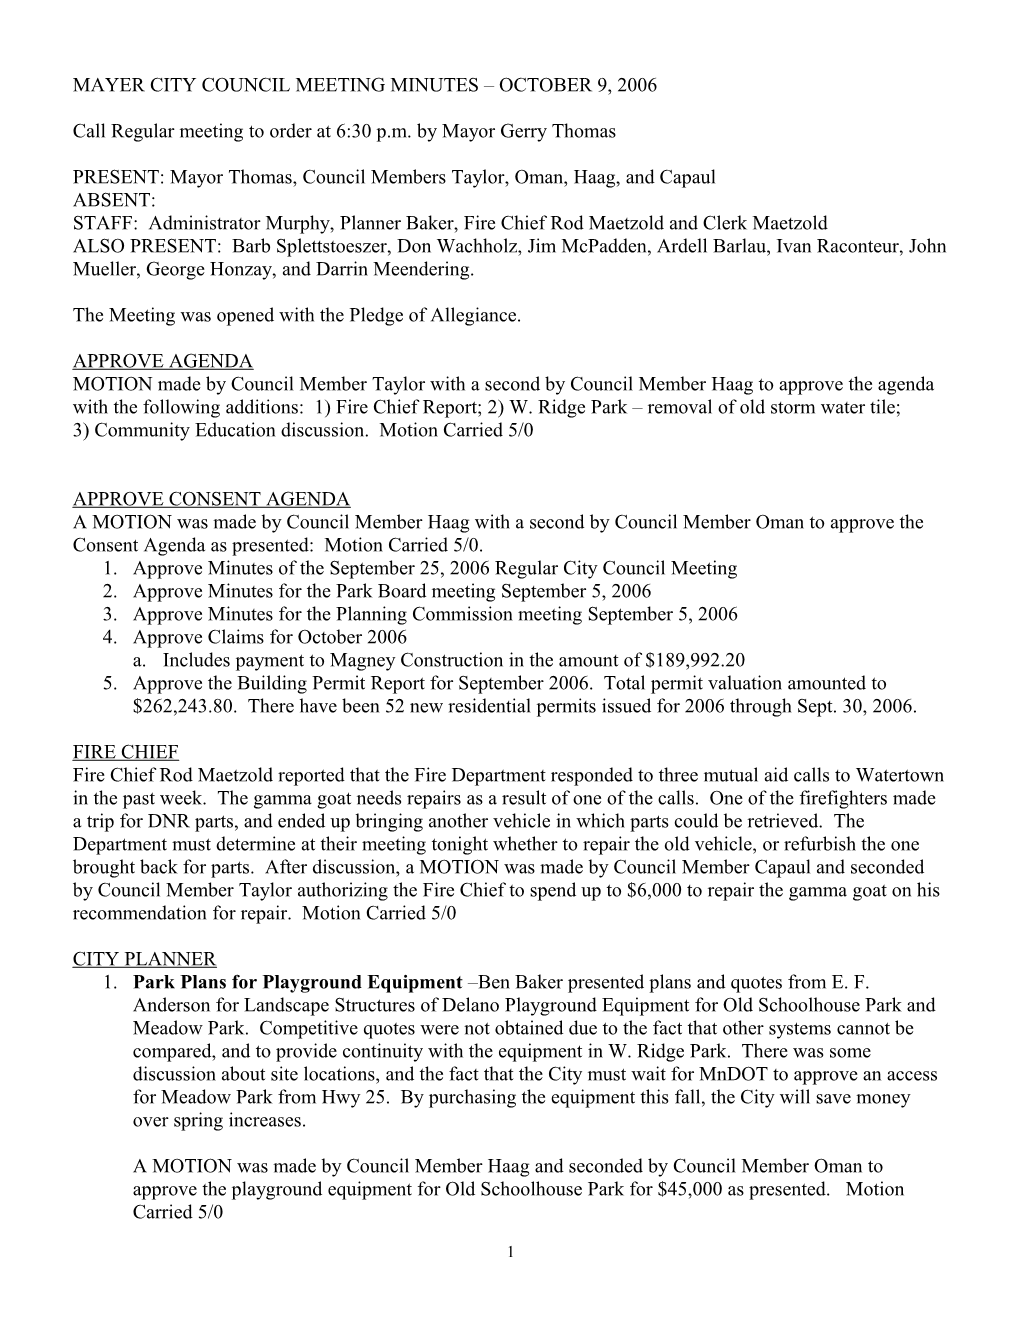 Mayer City Council Meeting Minutes - June 28, 1999 s2